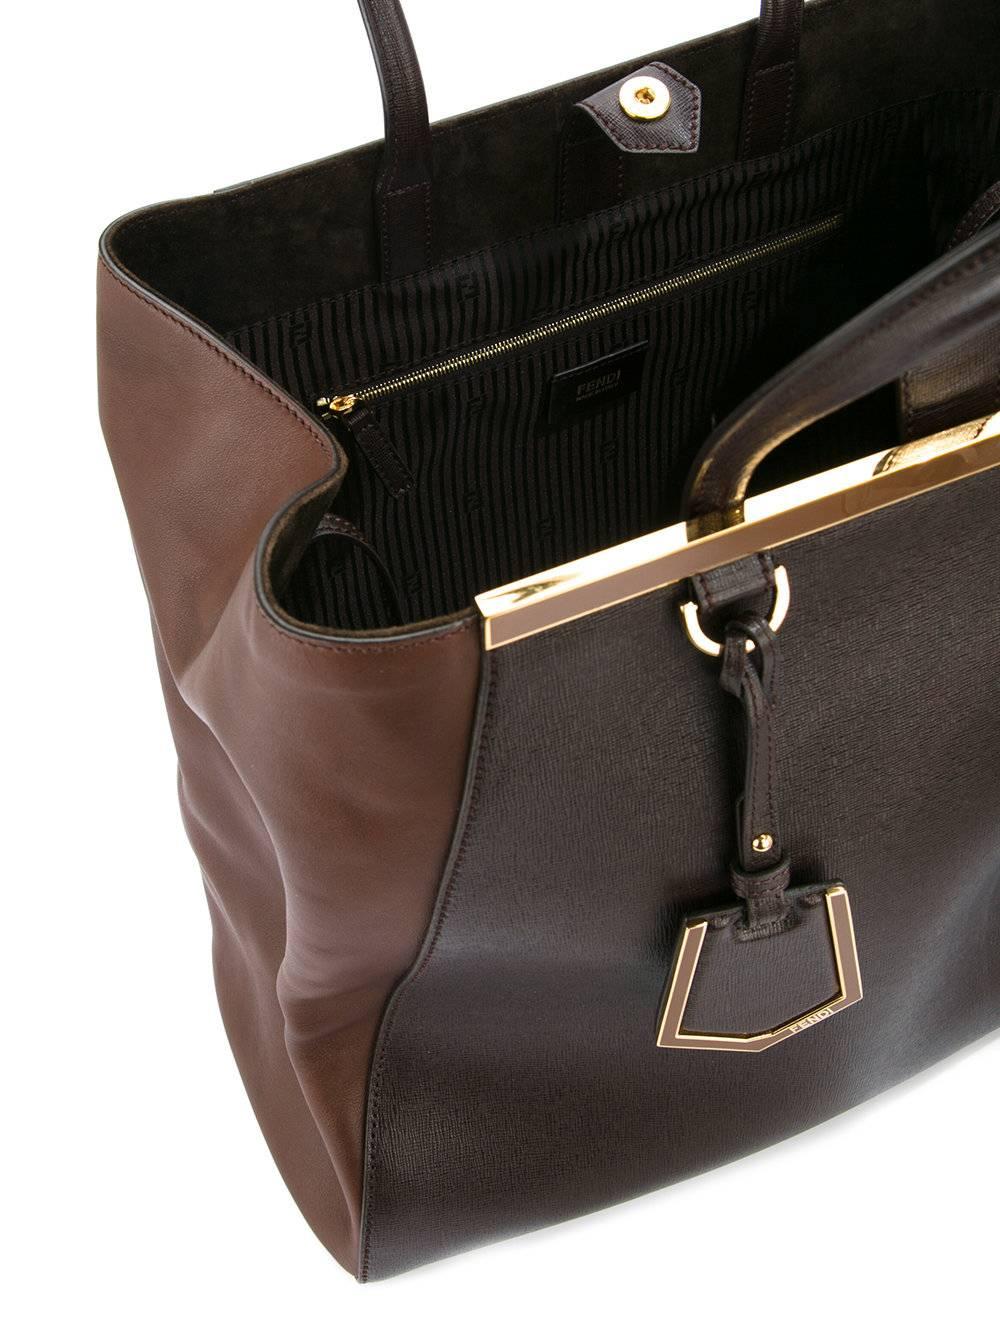 Fendi Chocolate Leather Large Carryall Travel Weekender Top Handle Tote Bag 1